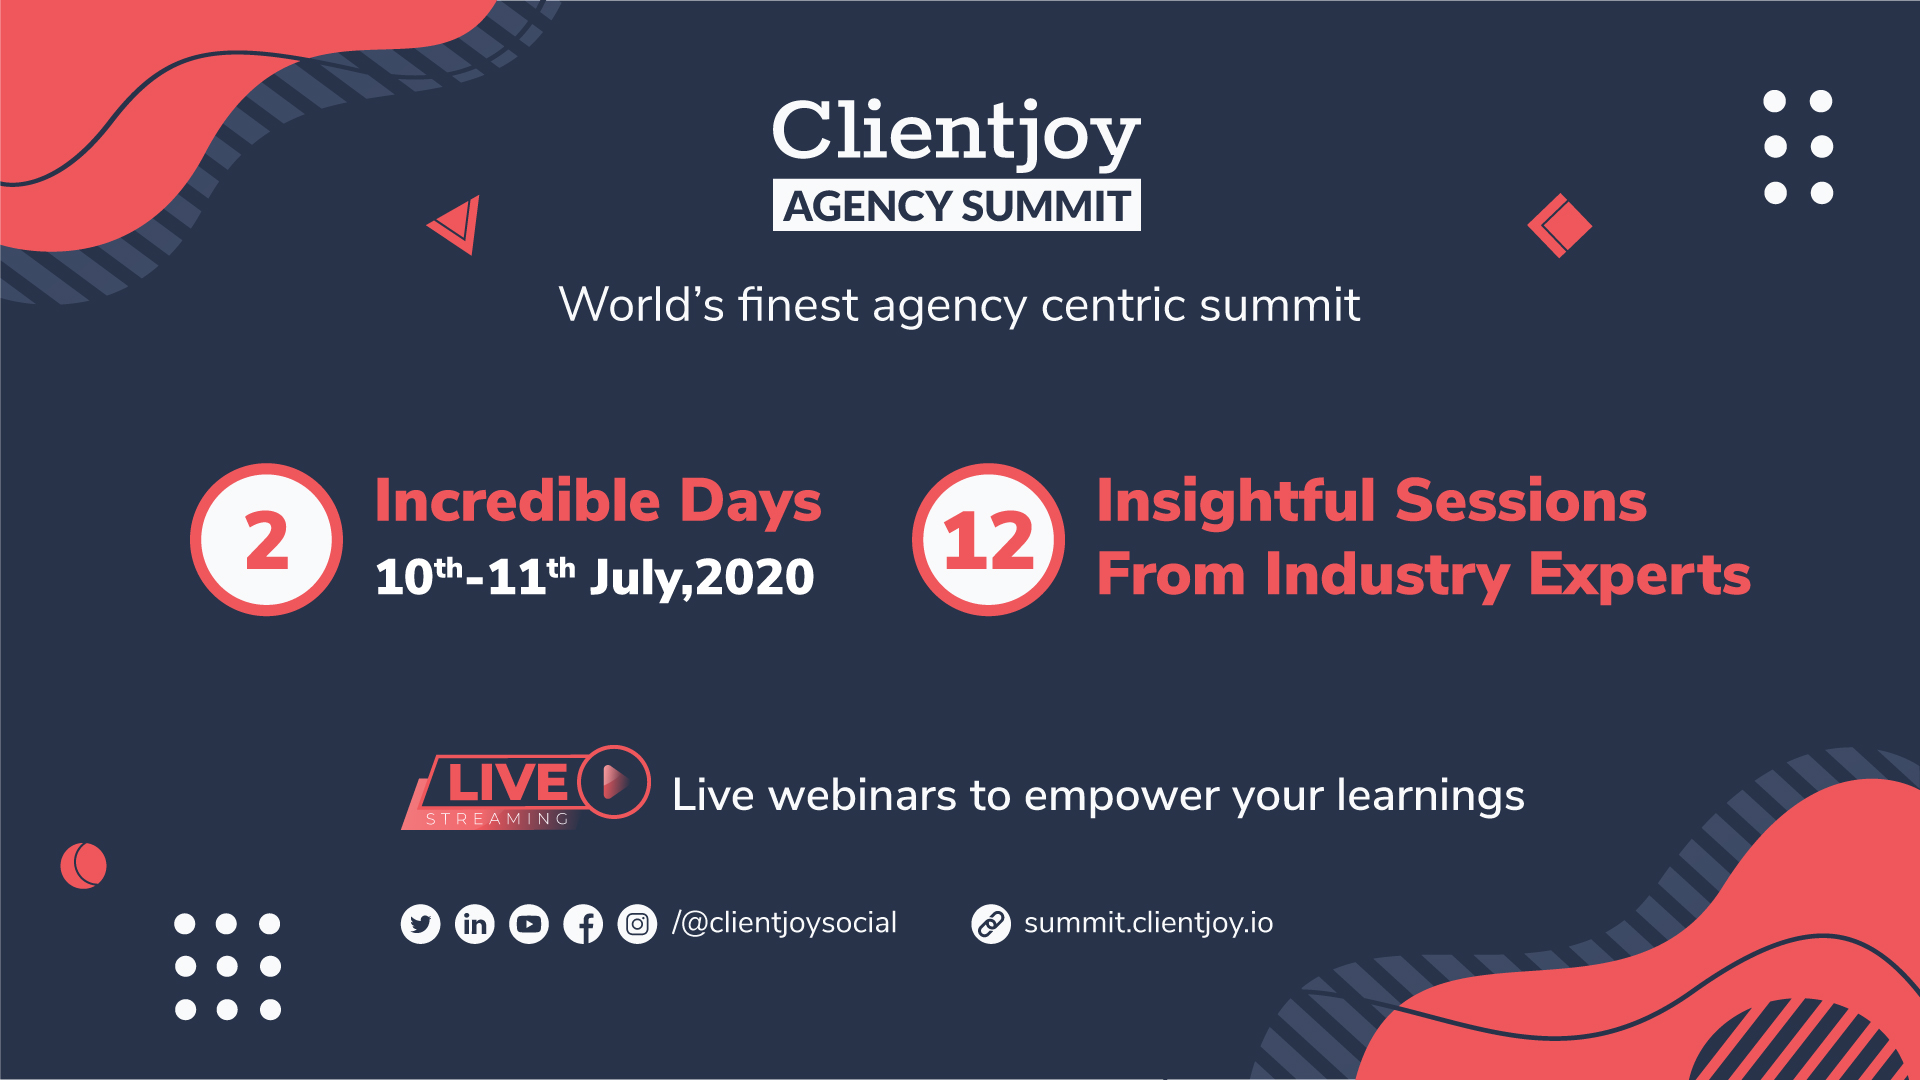 Clientjoy Agency Summit, Online